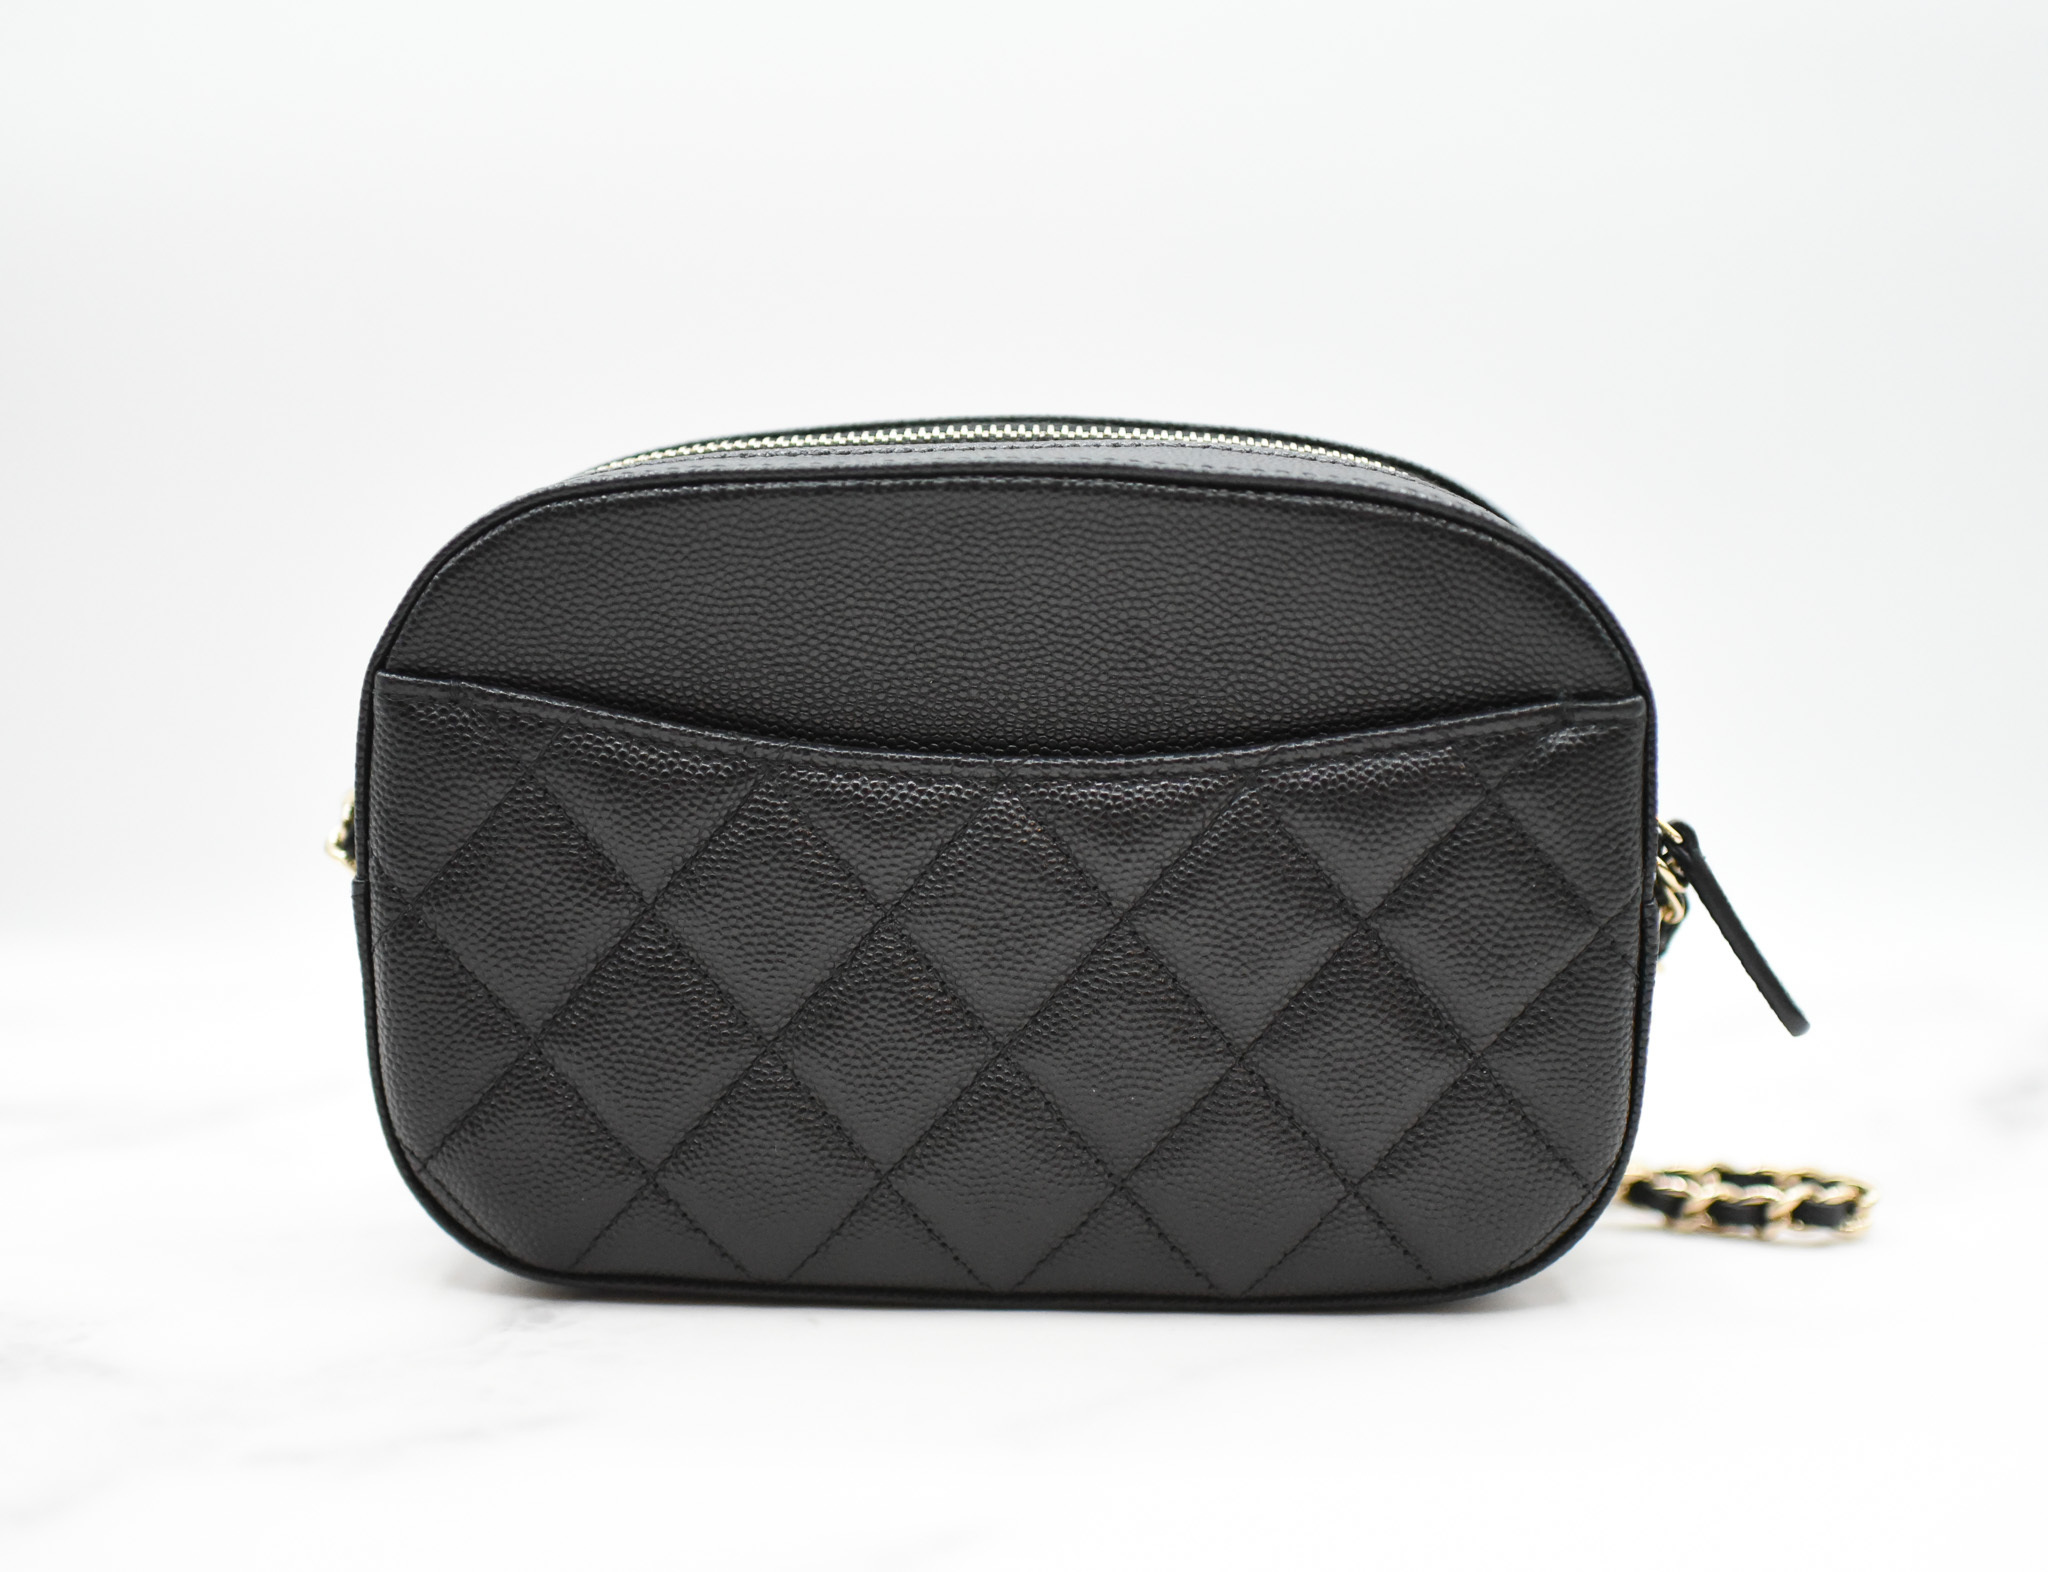 Chanel Camera Bag, Black Caviar Leather with Gold Hardware, New in Box  GA001 - Julia Rose Boston